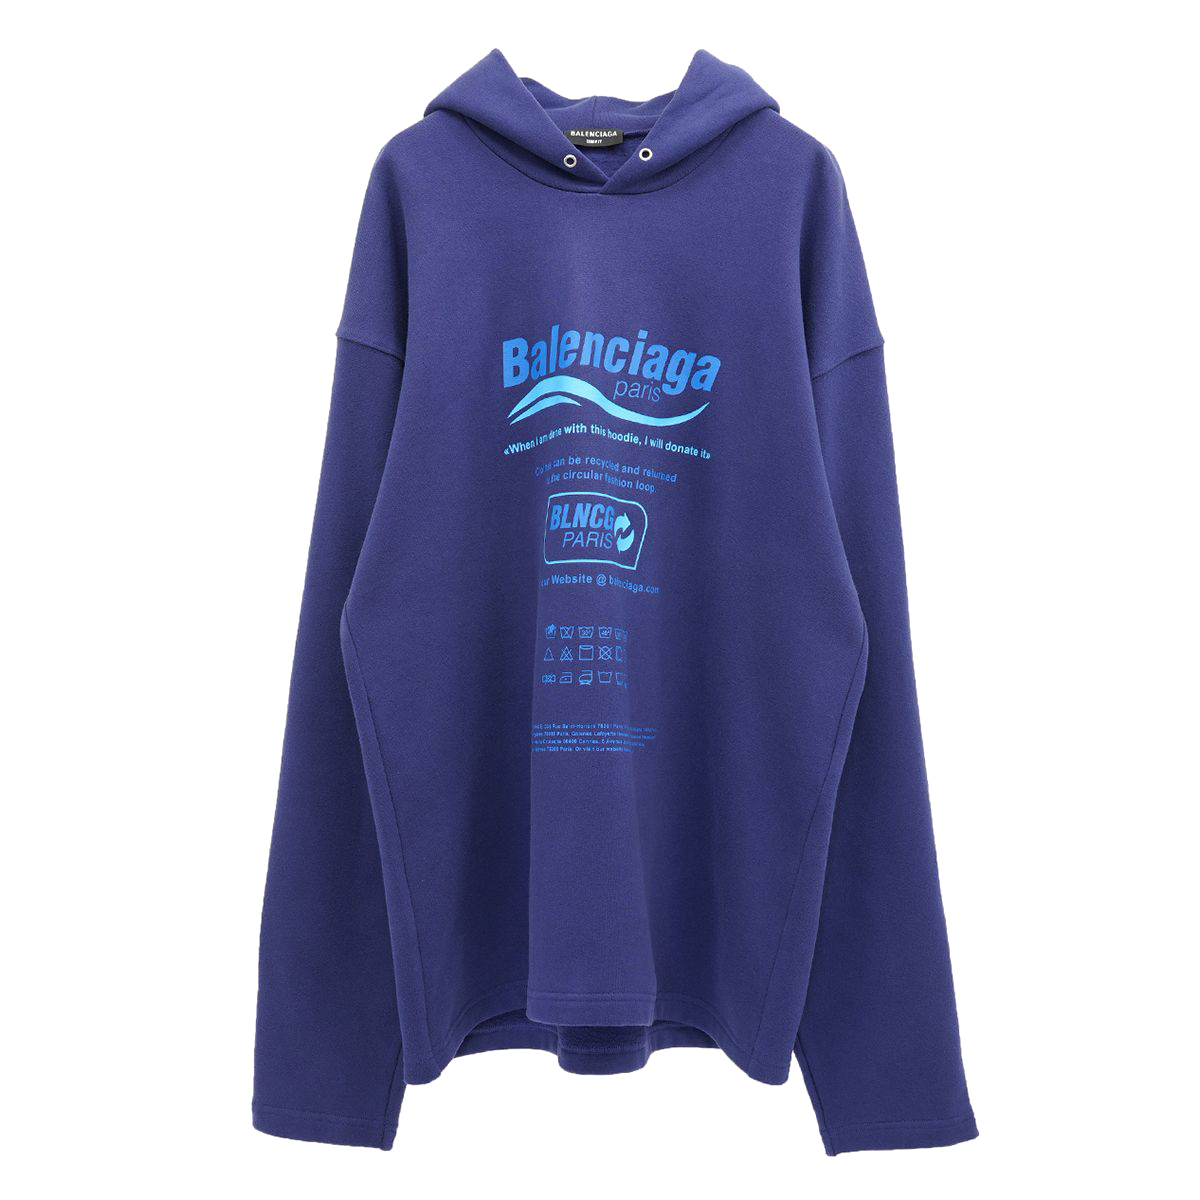 BALENCIAGA Sweatshirts Men  Wide Fit hoodie Blue  BALENCIAGA 674986  TNVB64388  Leam Luxury Shopping Online